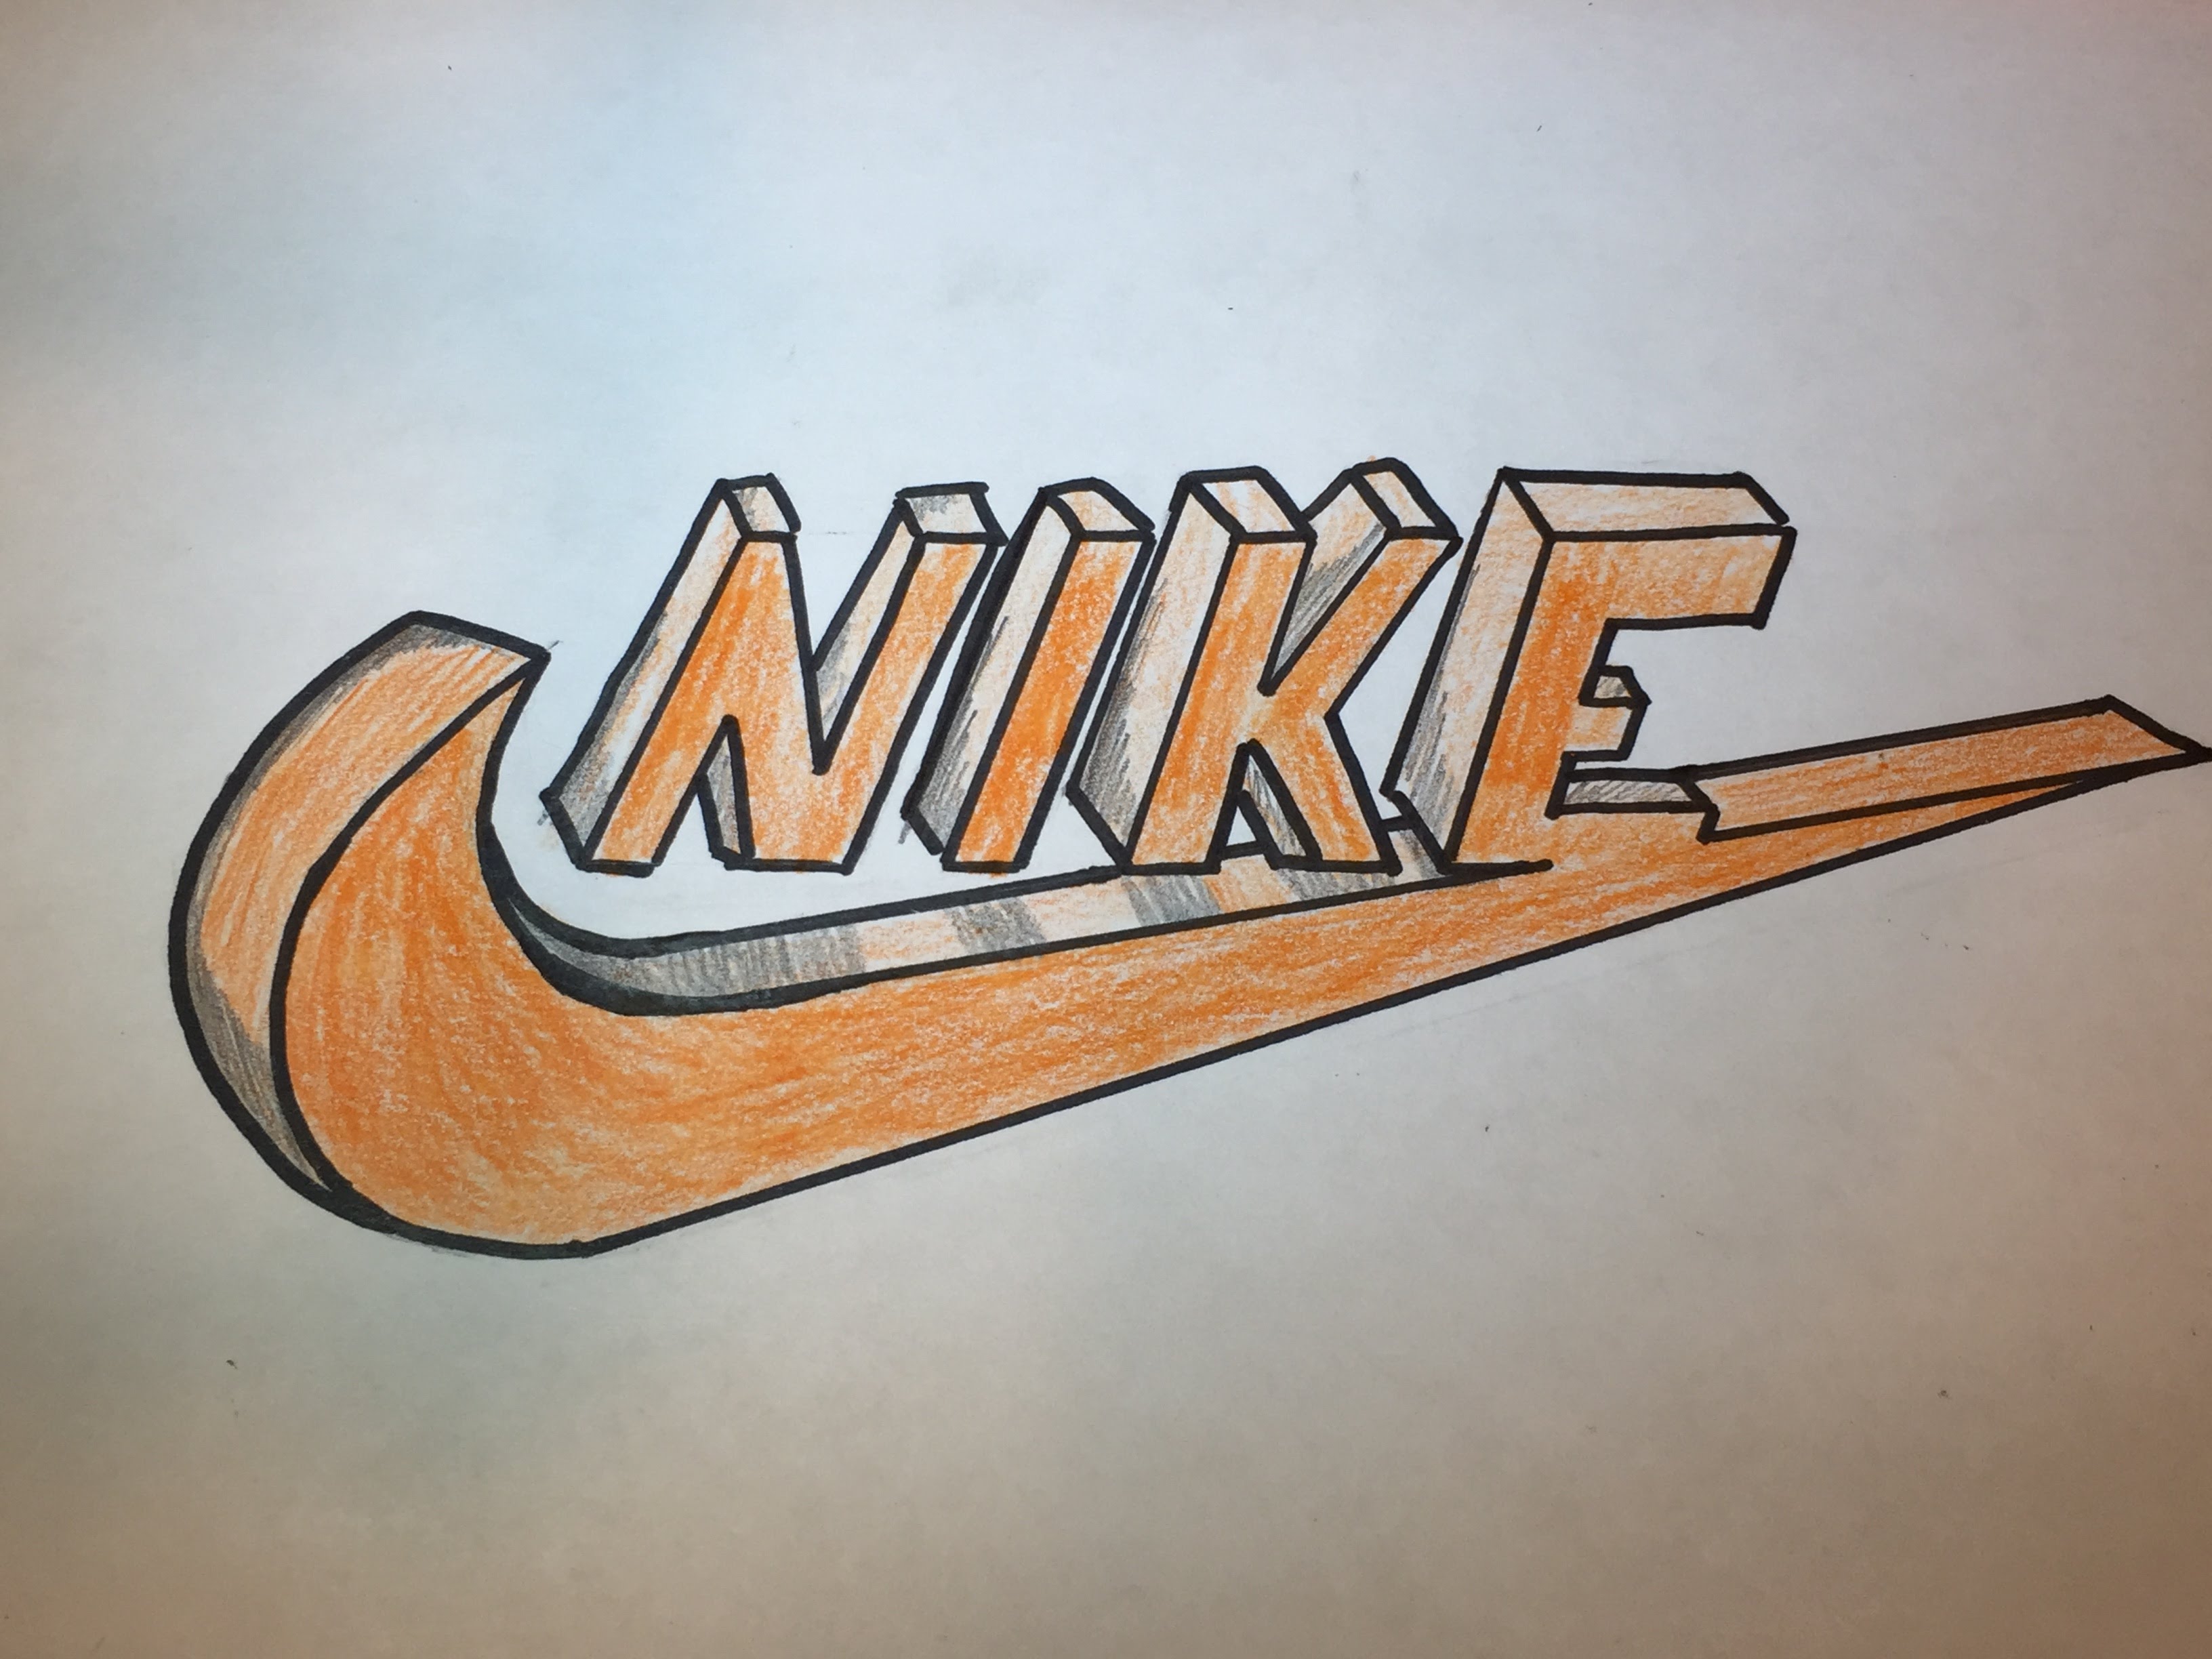 Nike Logo Drawing at GetDrawings | Free download